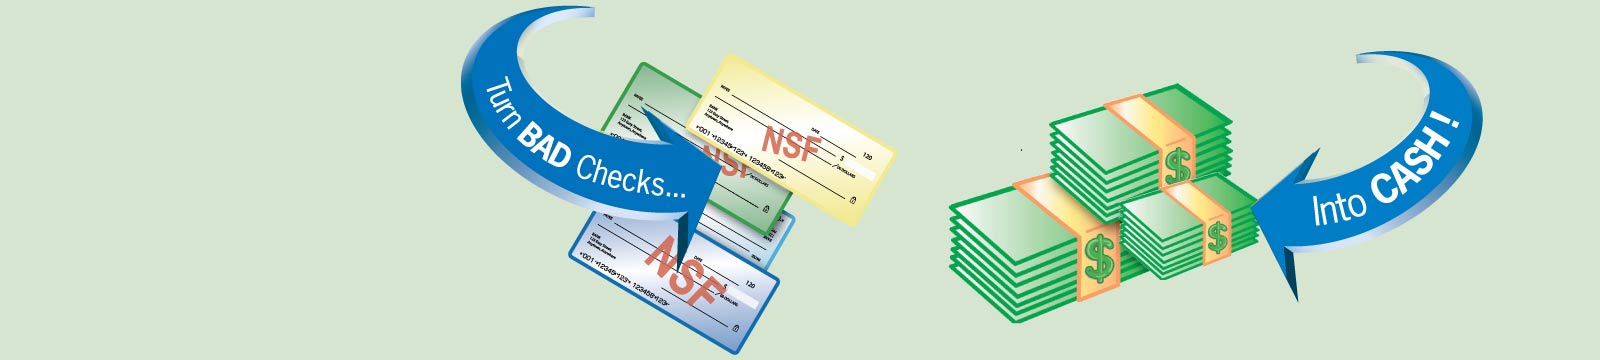 NSF Checks with Arrow to Money